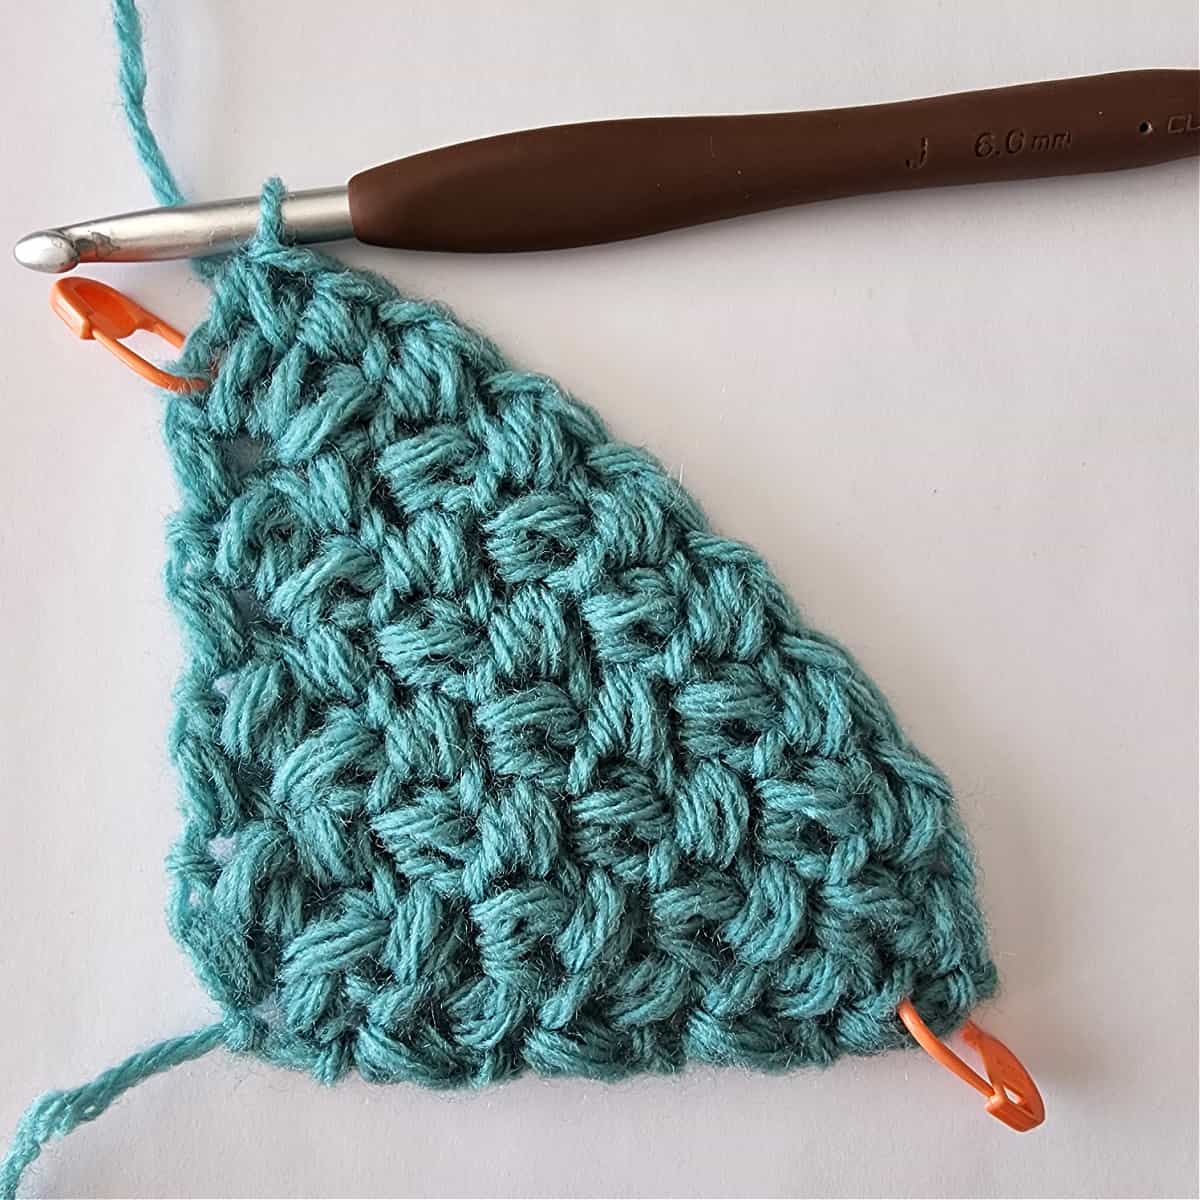 Aqua color yarn with mini bean stitch worked corner to corner.